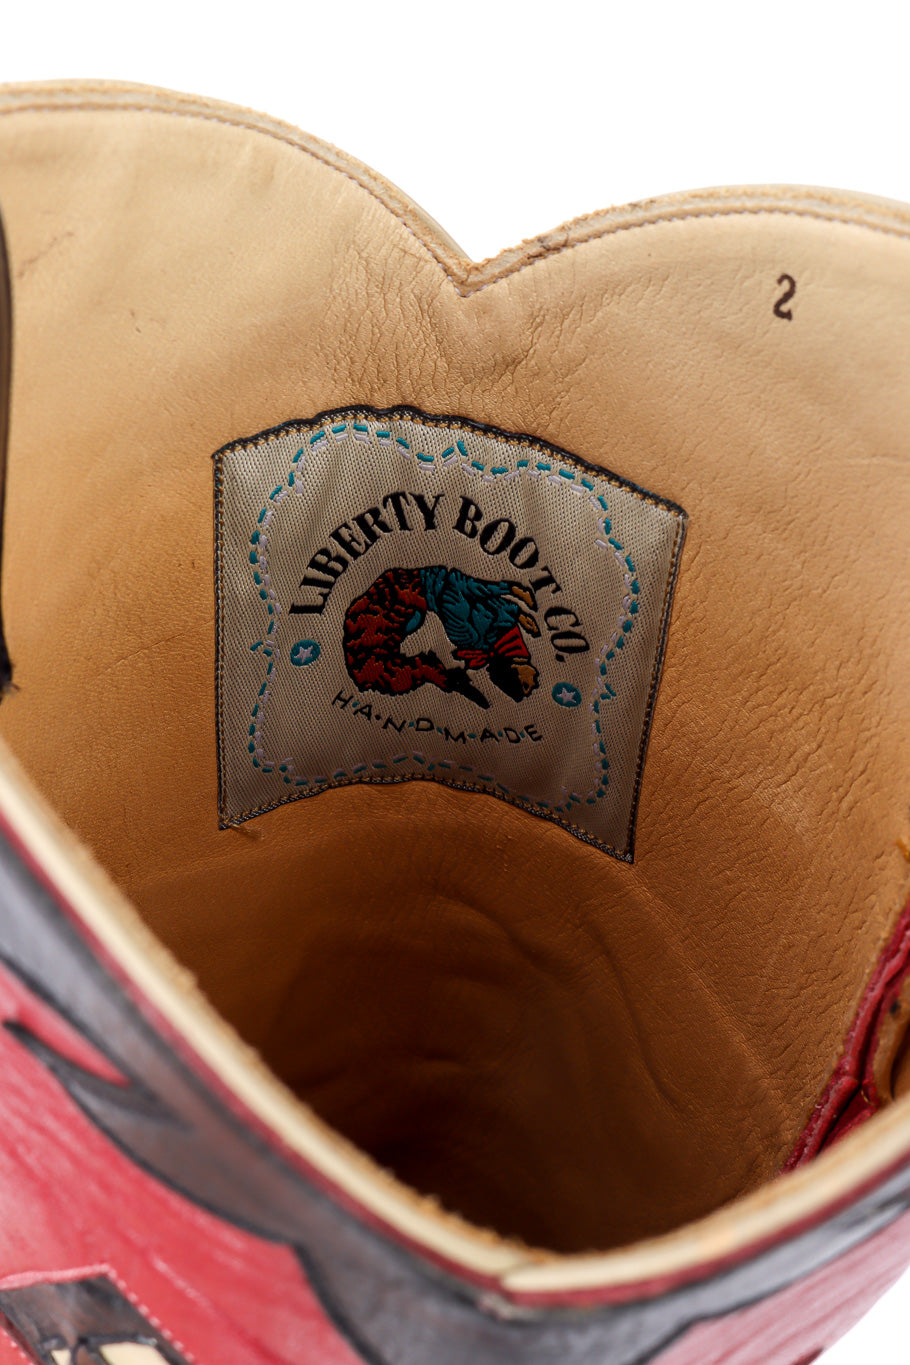 Liberty Boot Co. Bad Kitty Western Boots signature label closeup @Recessla